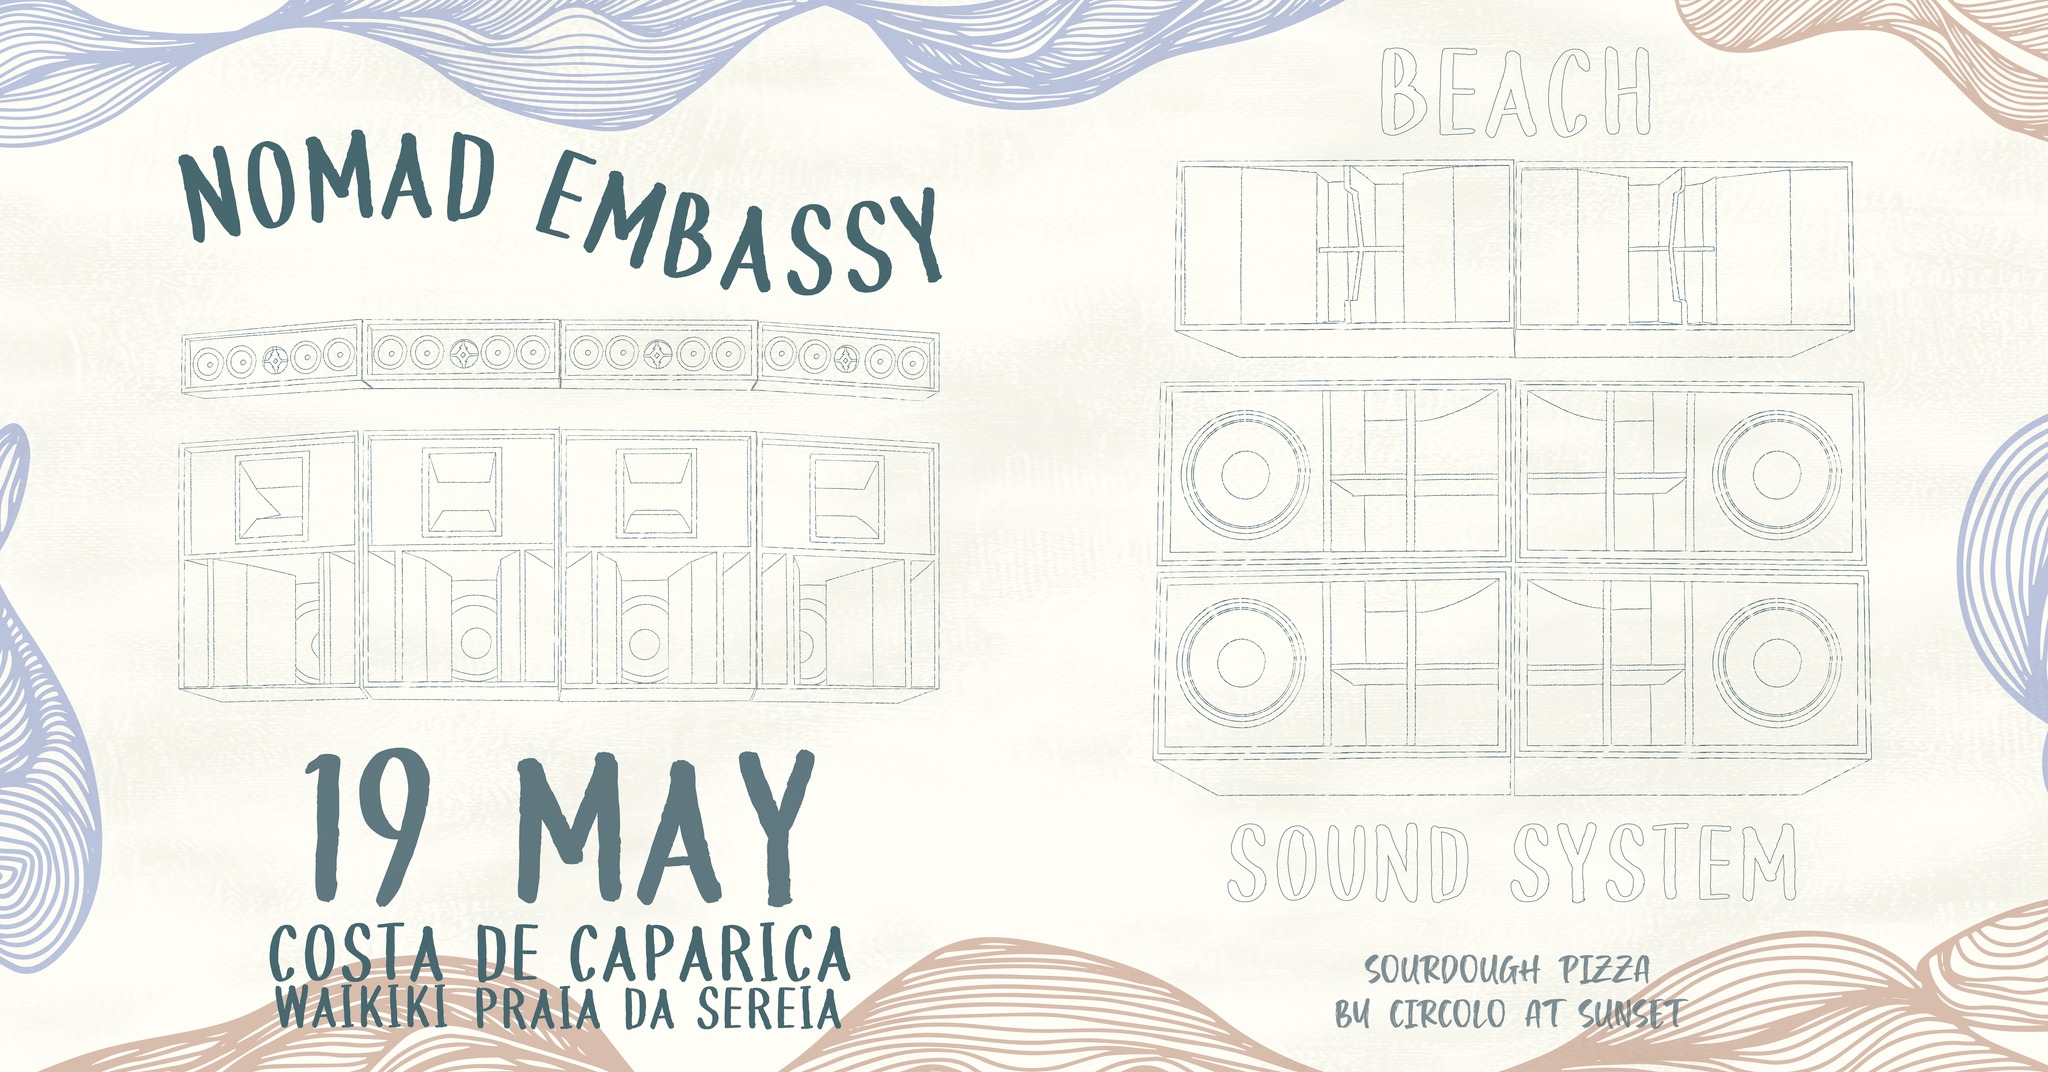 Embassy of Dub #10 - Beach session - Nomad Embassy Soundsystem